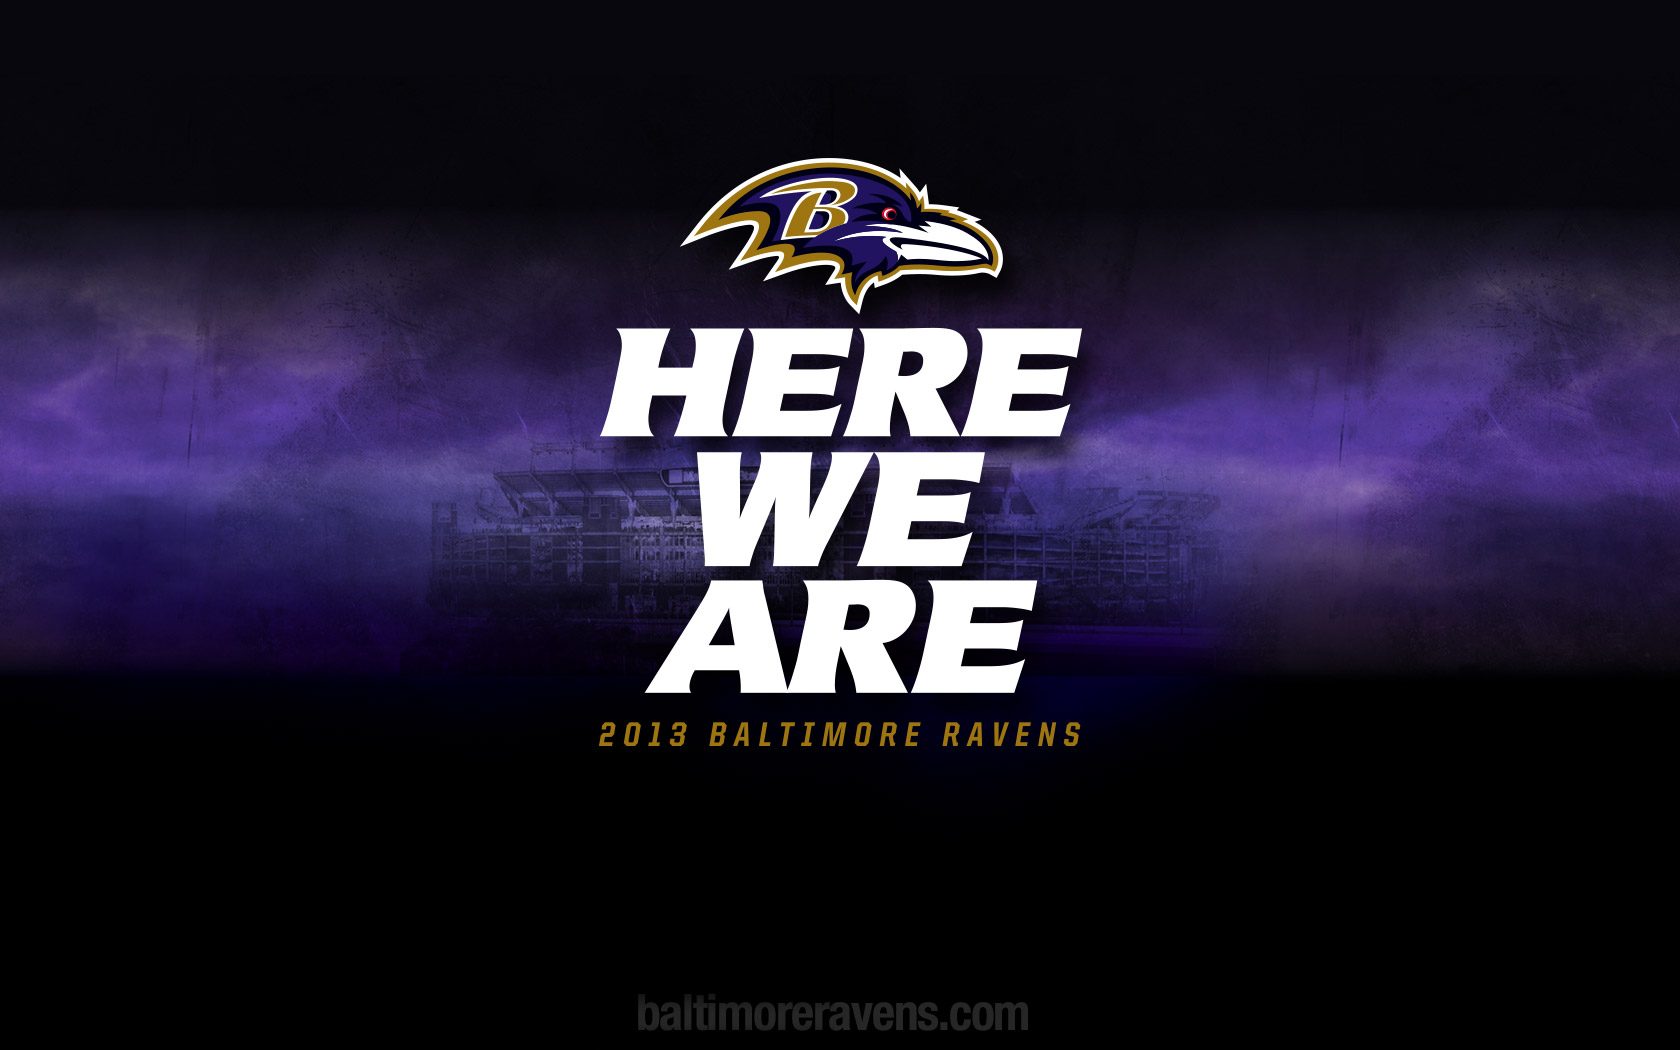 Baltimore Ravens Wallpaper | Best NFL Football Wallpapers | NFL ...